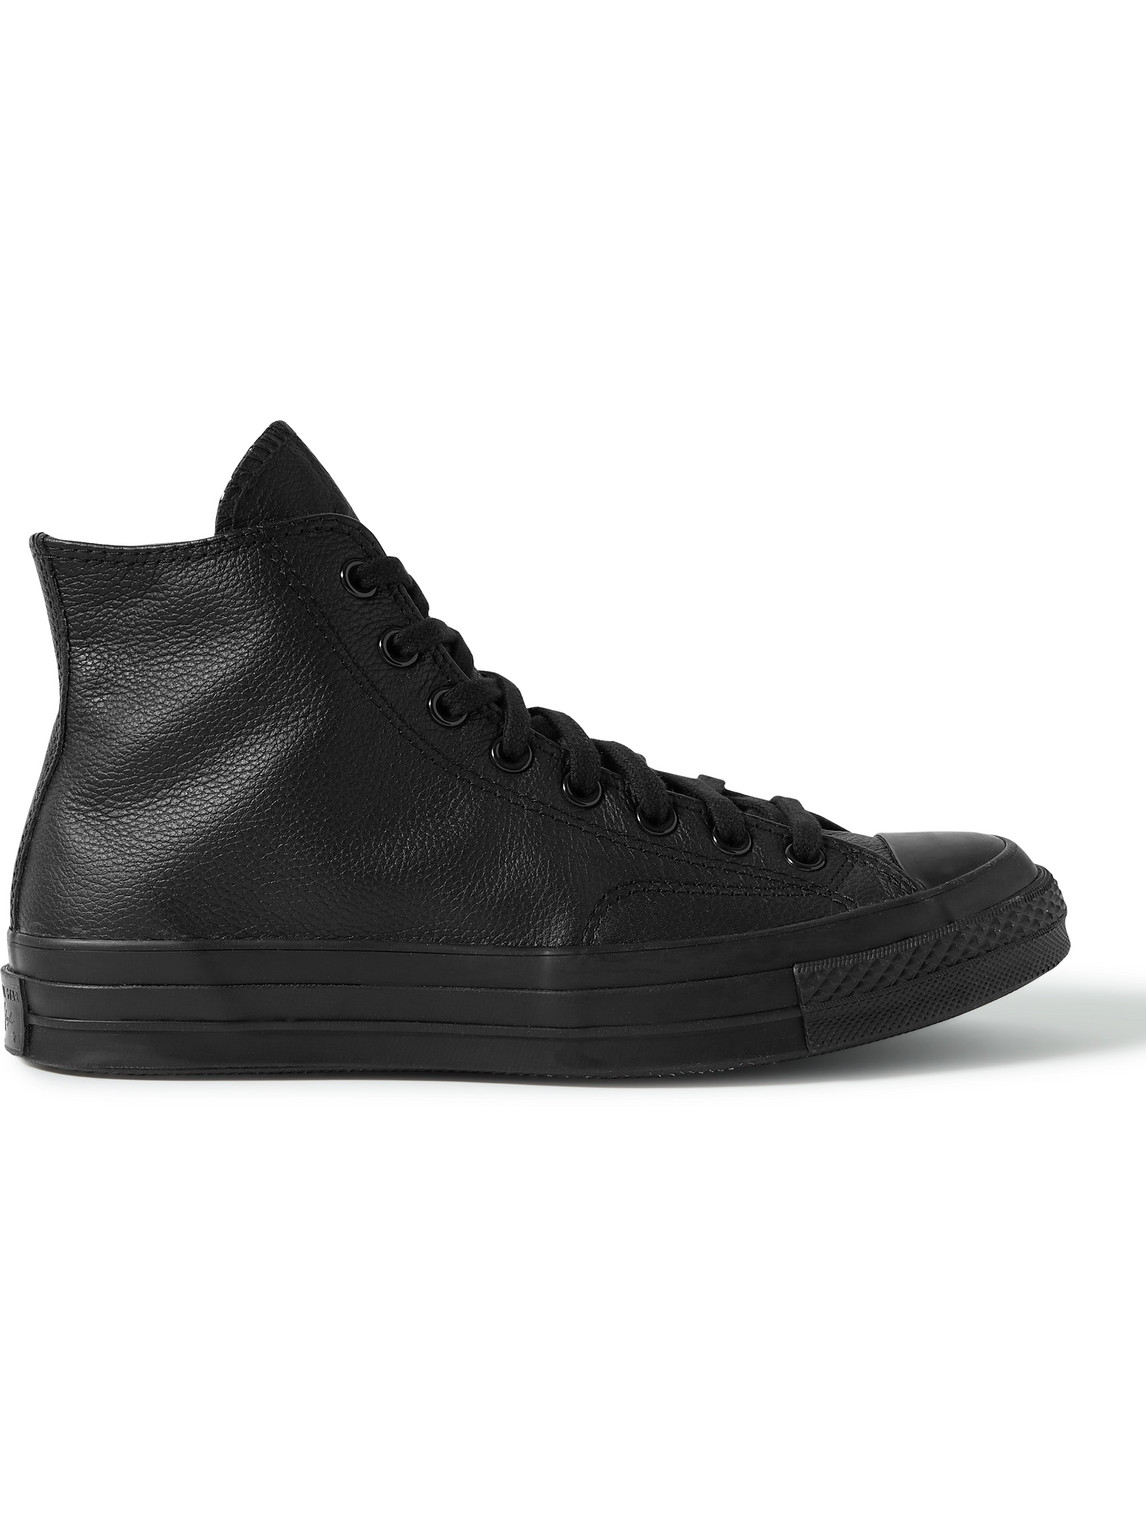 Converse - Chuck 70 Full-Grain Leather High-Top Sneakers - Men - Black - UK 5.5